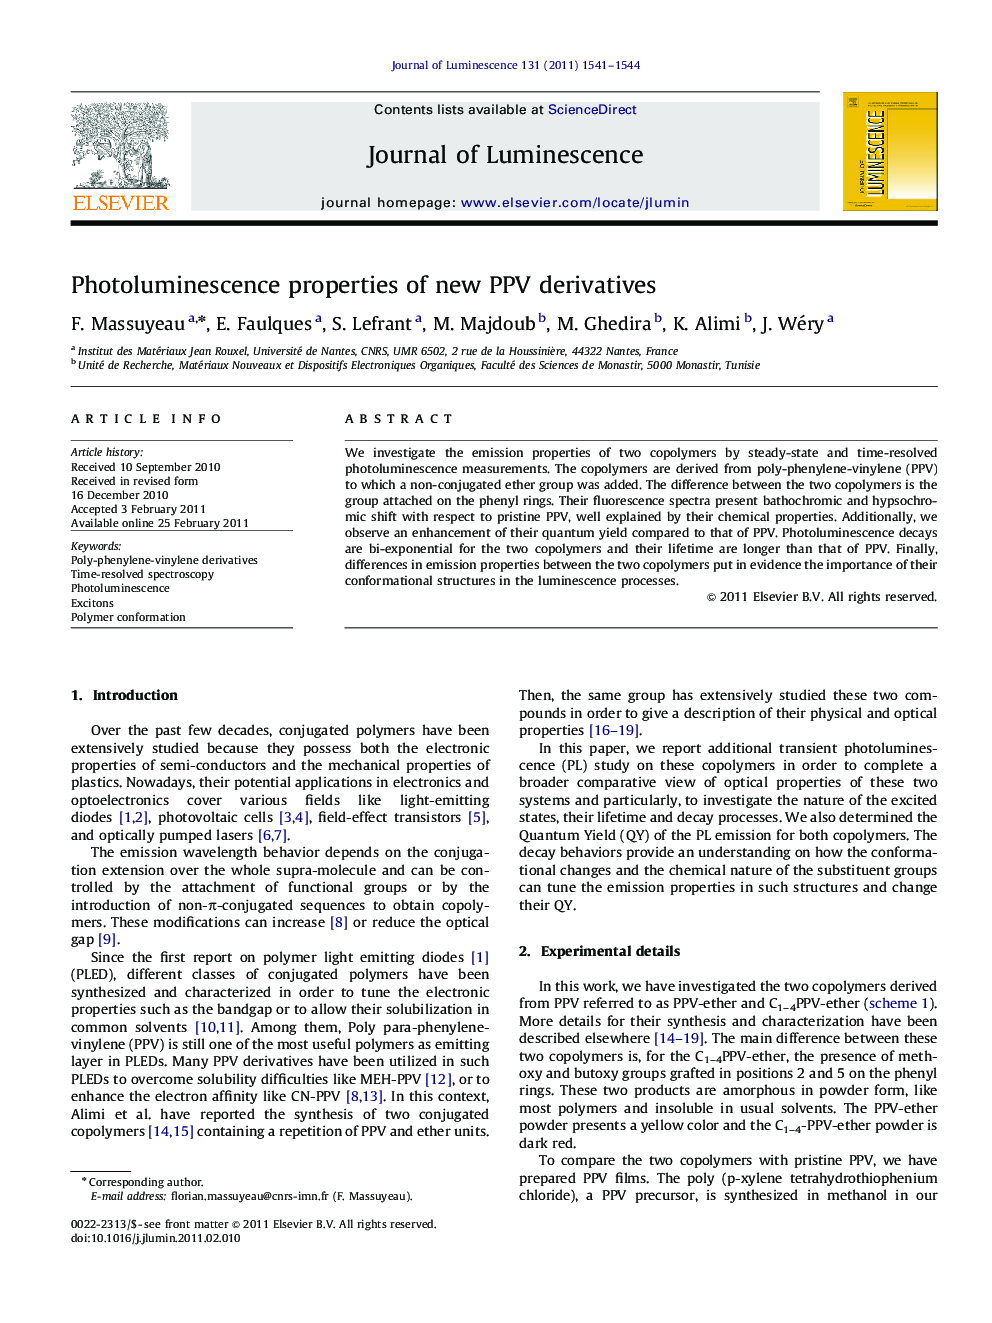 Photoluminescence properties of new PPV derivatives